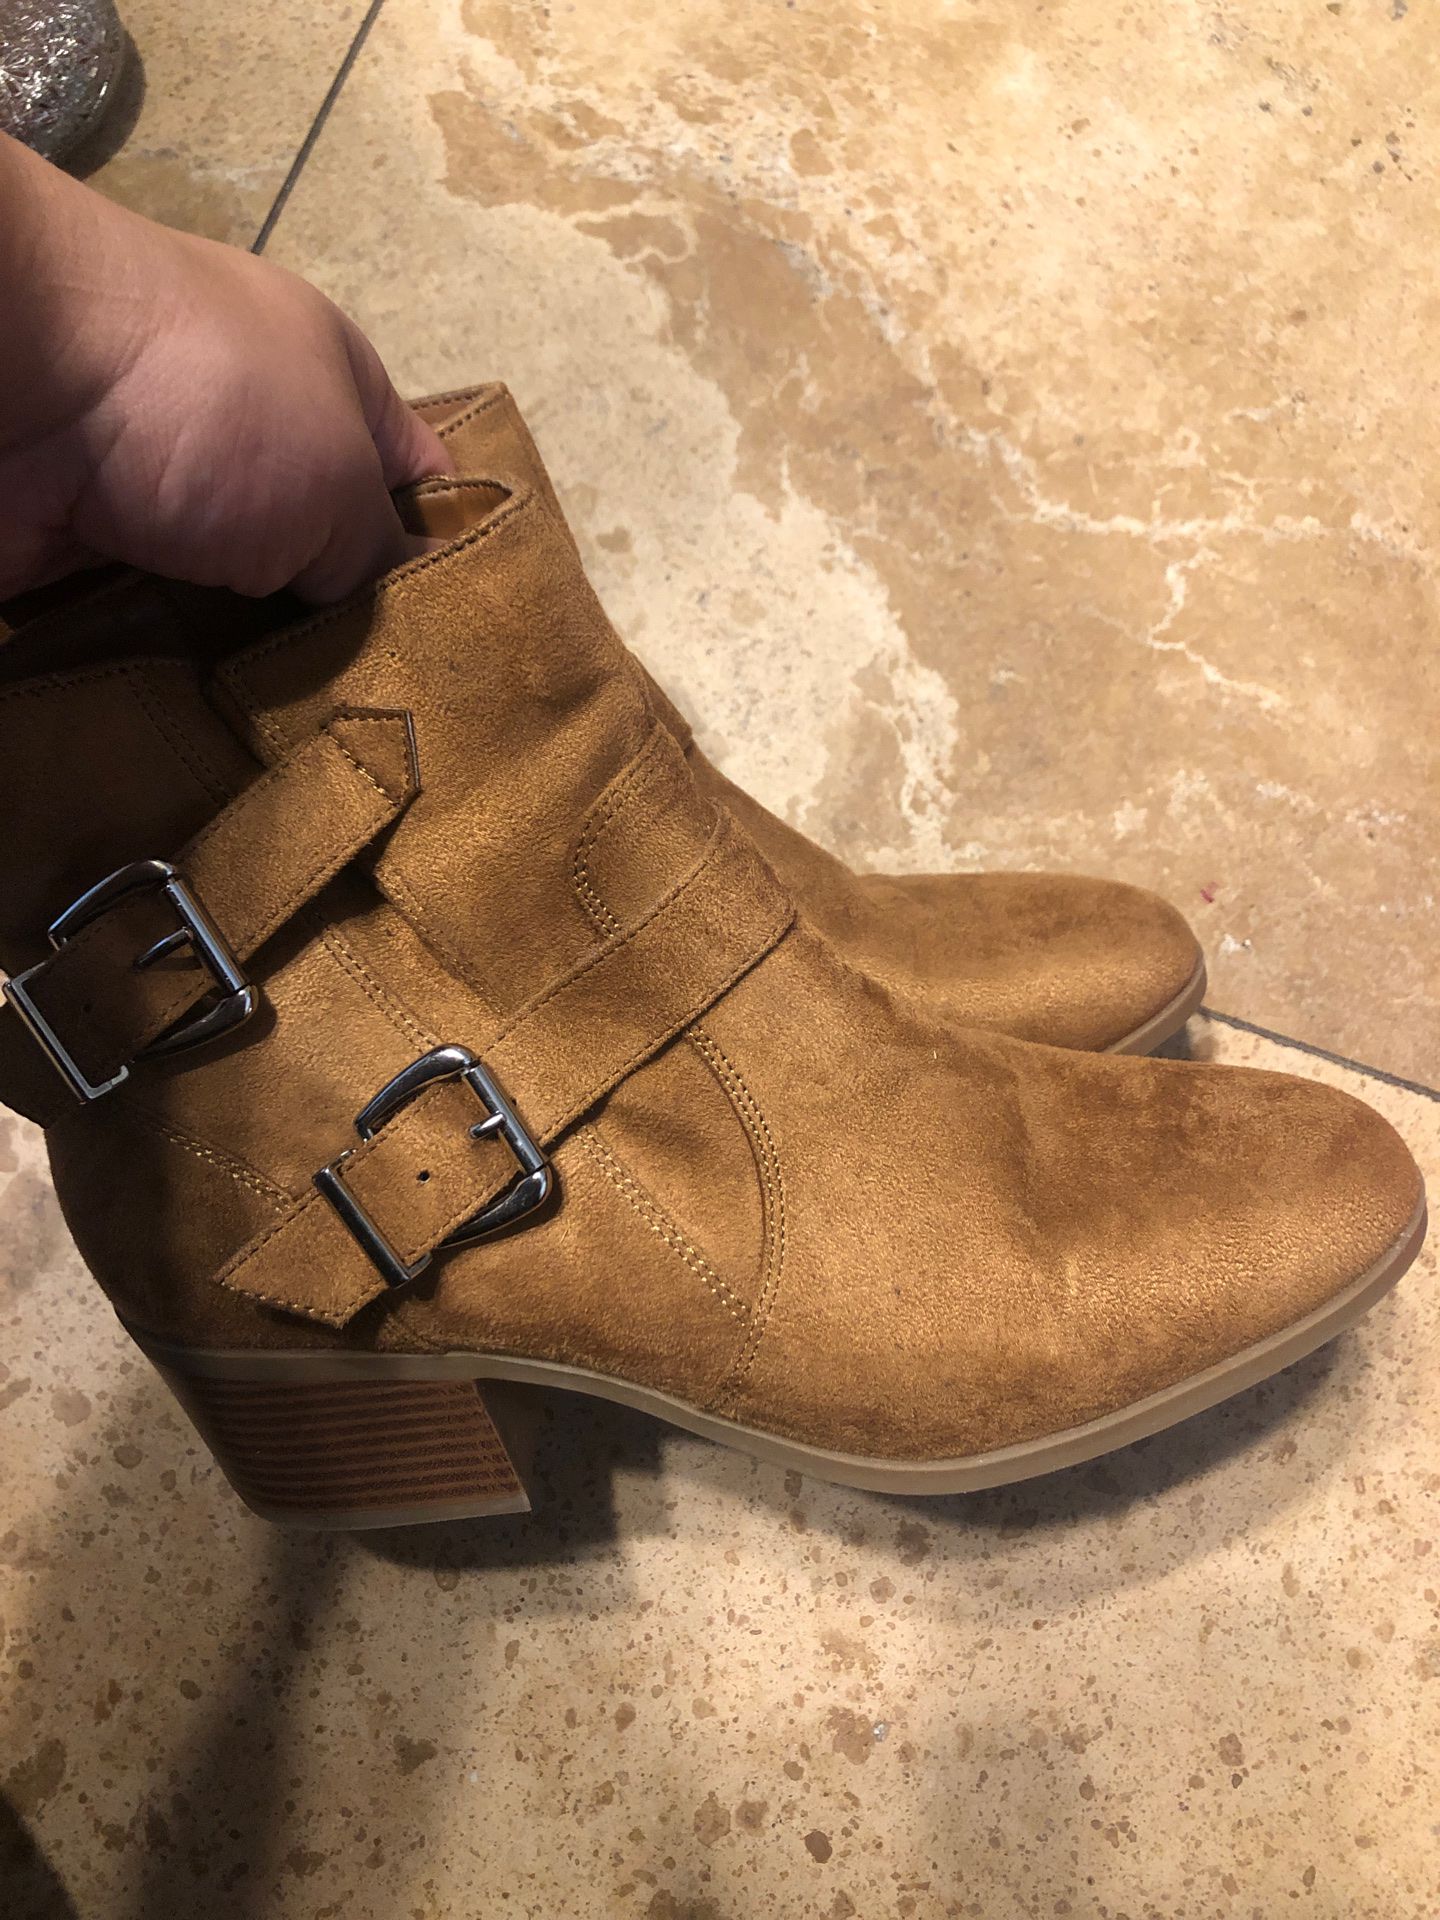 Women’s boots size 8w